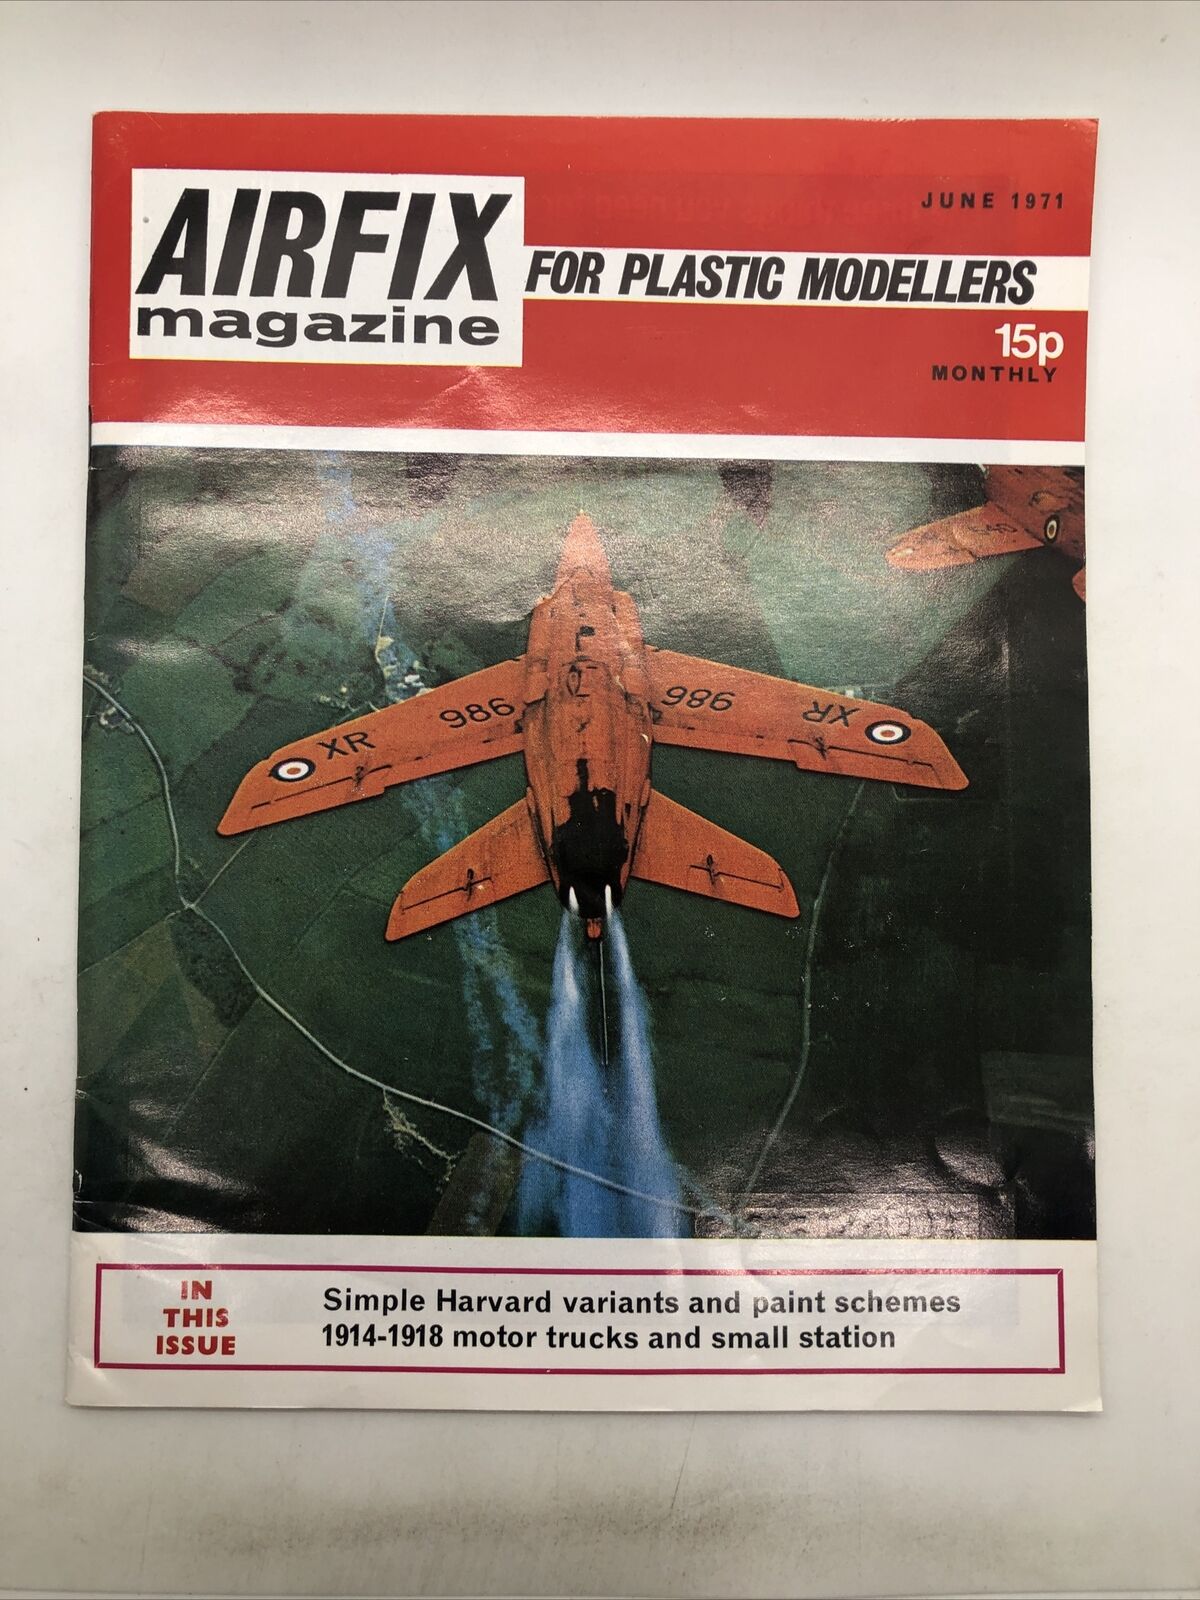 Vintage AIRFIX MAGAZINE FOR PLASTIC MODELLERS June 1971